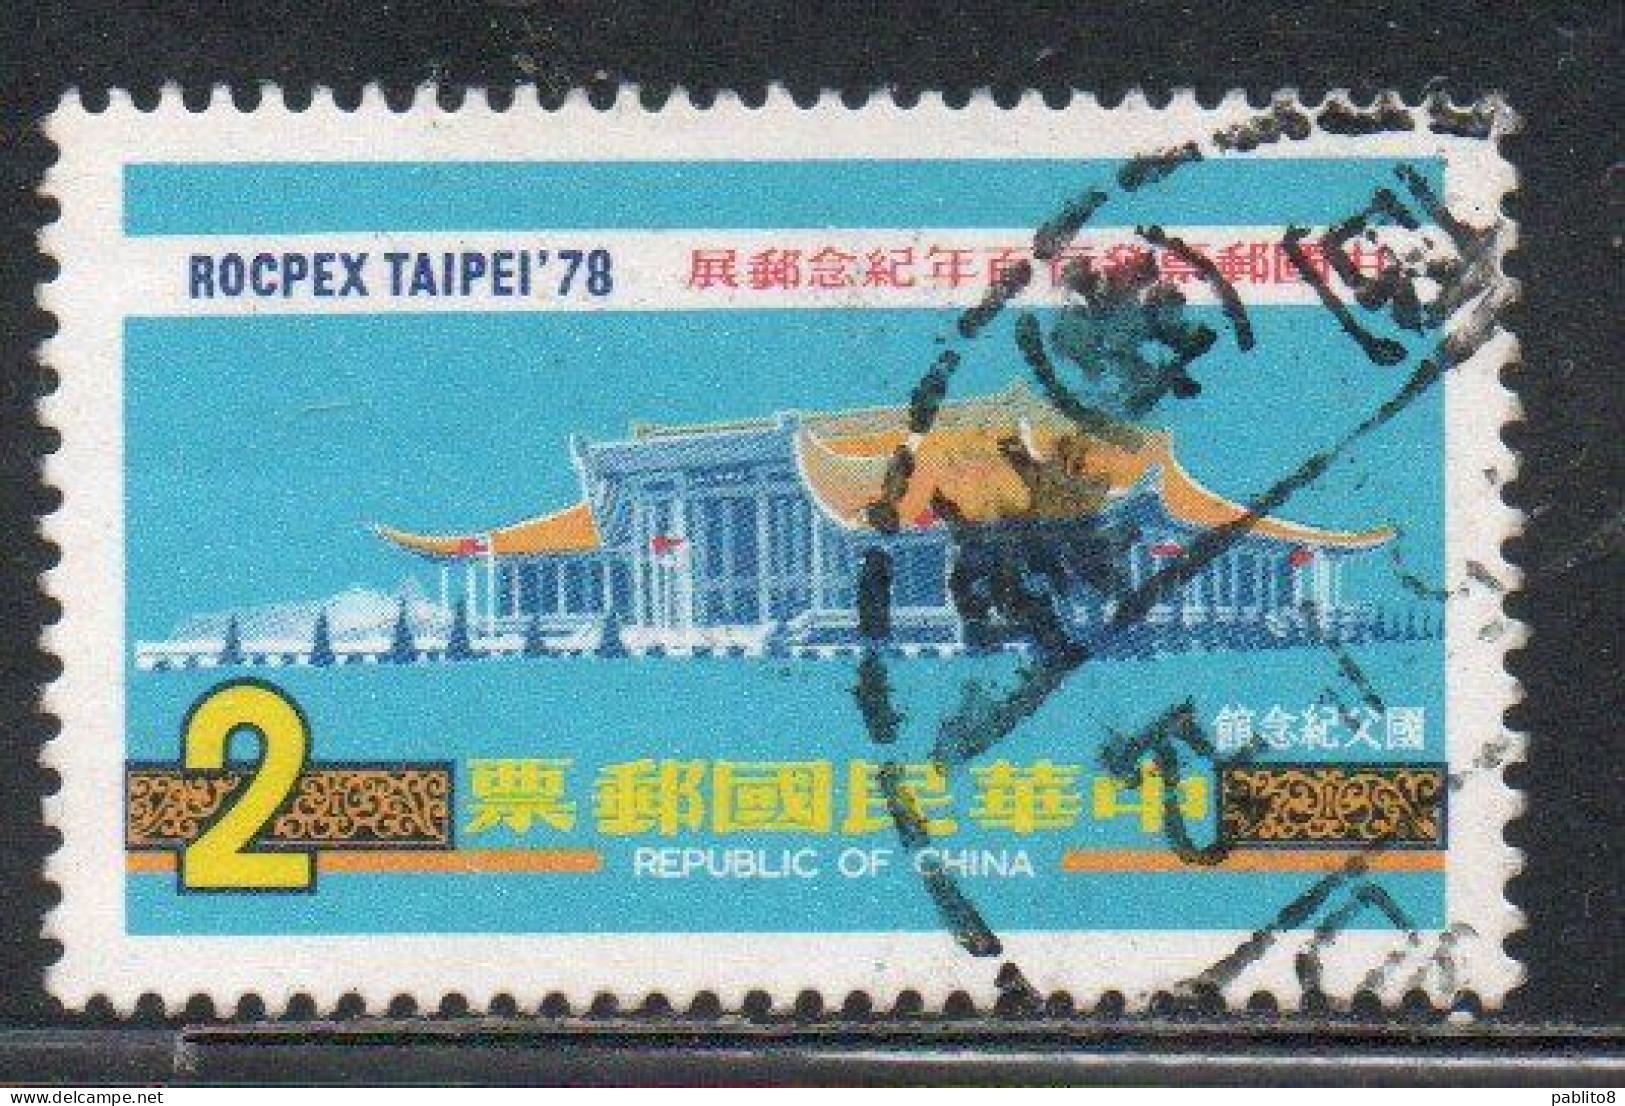 CHINA REPUBLIC CINA TAIWAN FORMOSA 1978 ROCPEX78 PHILATELIC EXHIBITION SUN YAT-SEN MEMORIAL HALL 2$ USED USATO OBLITERE' - Used Stamps